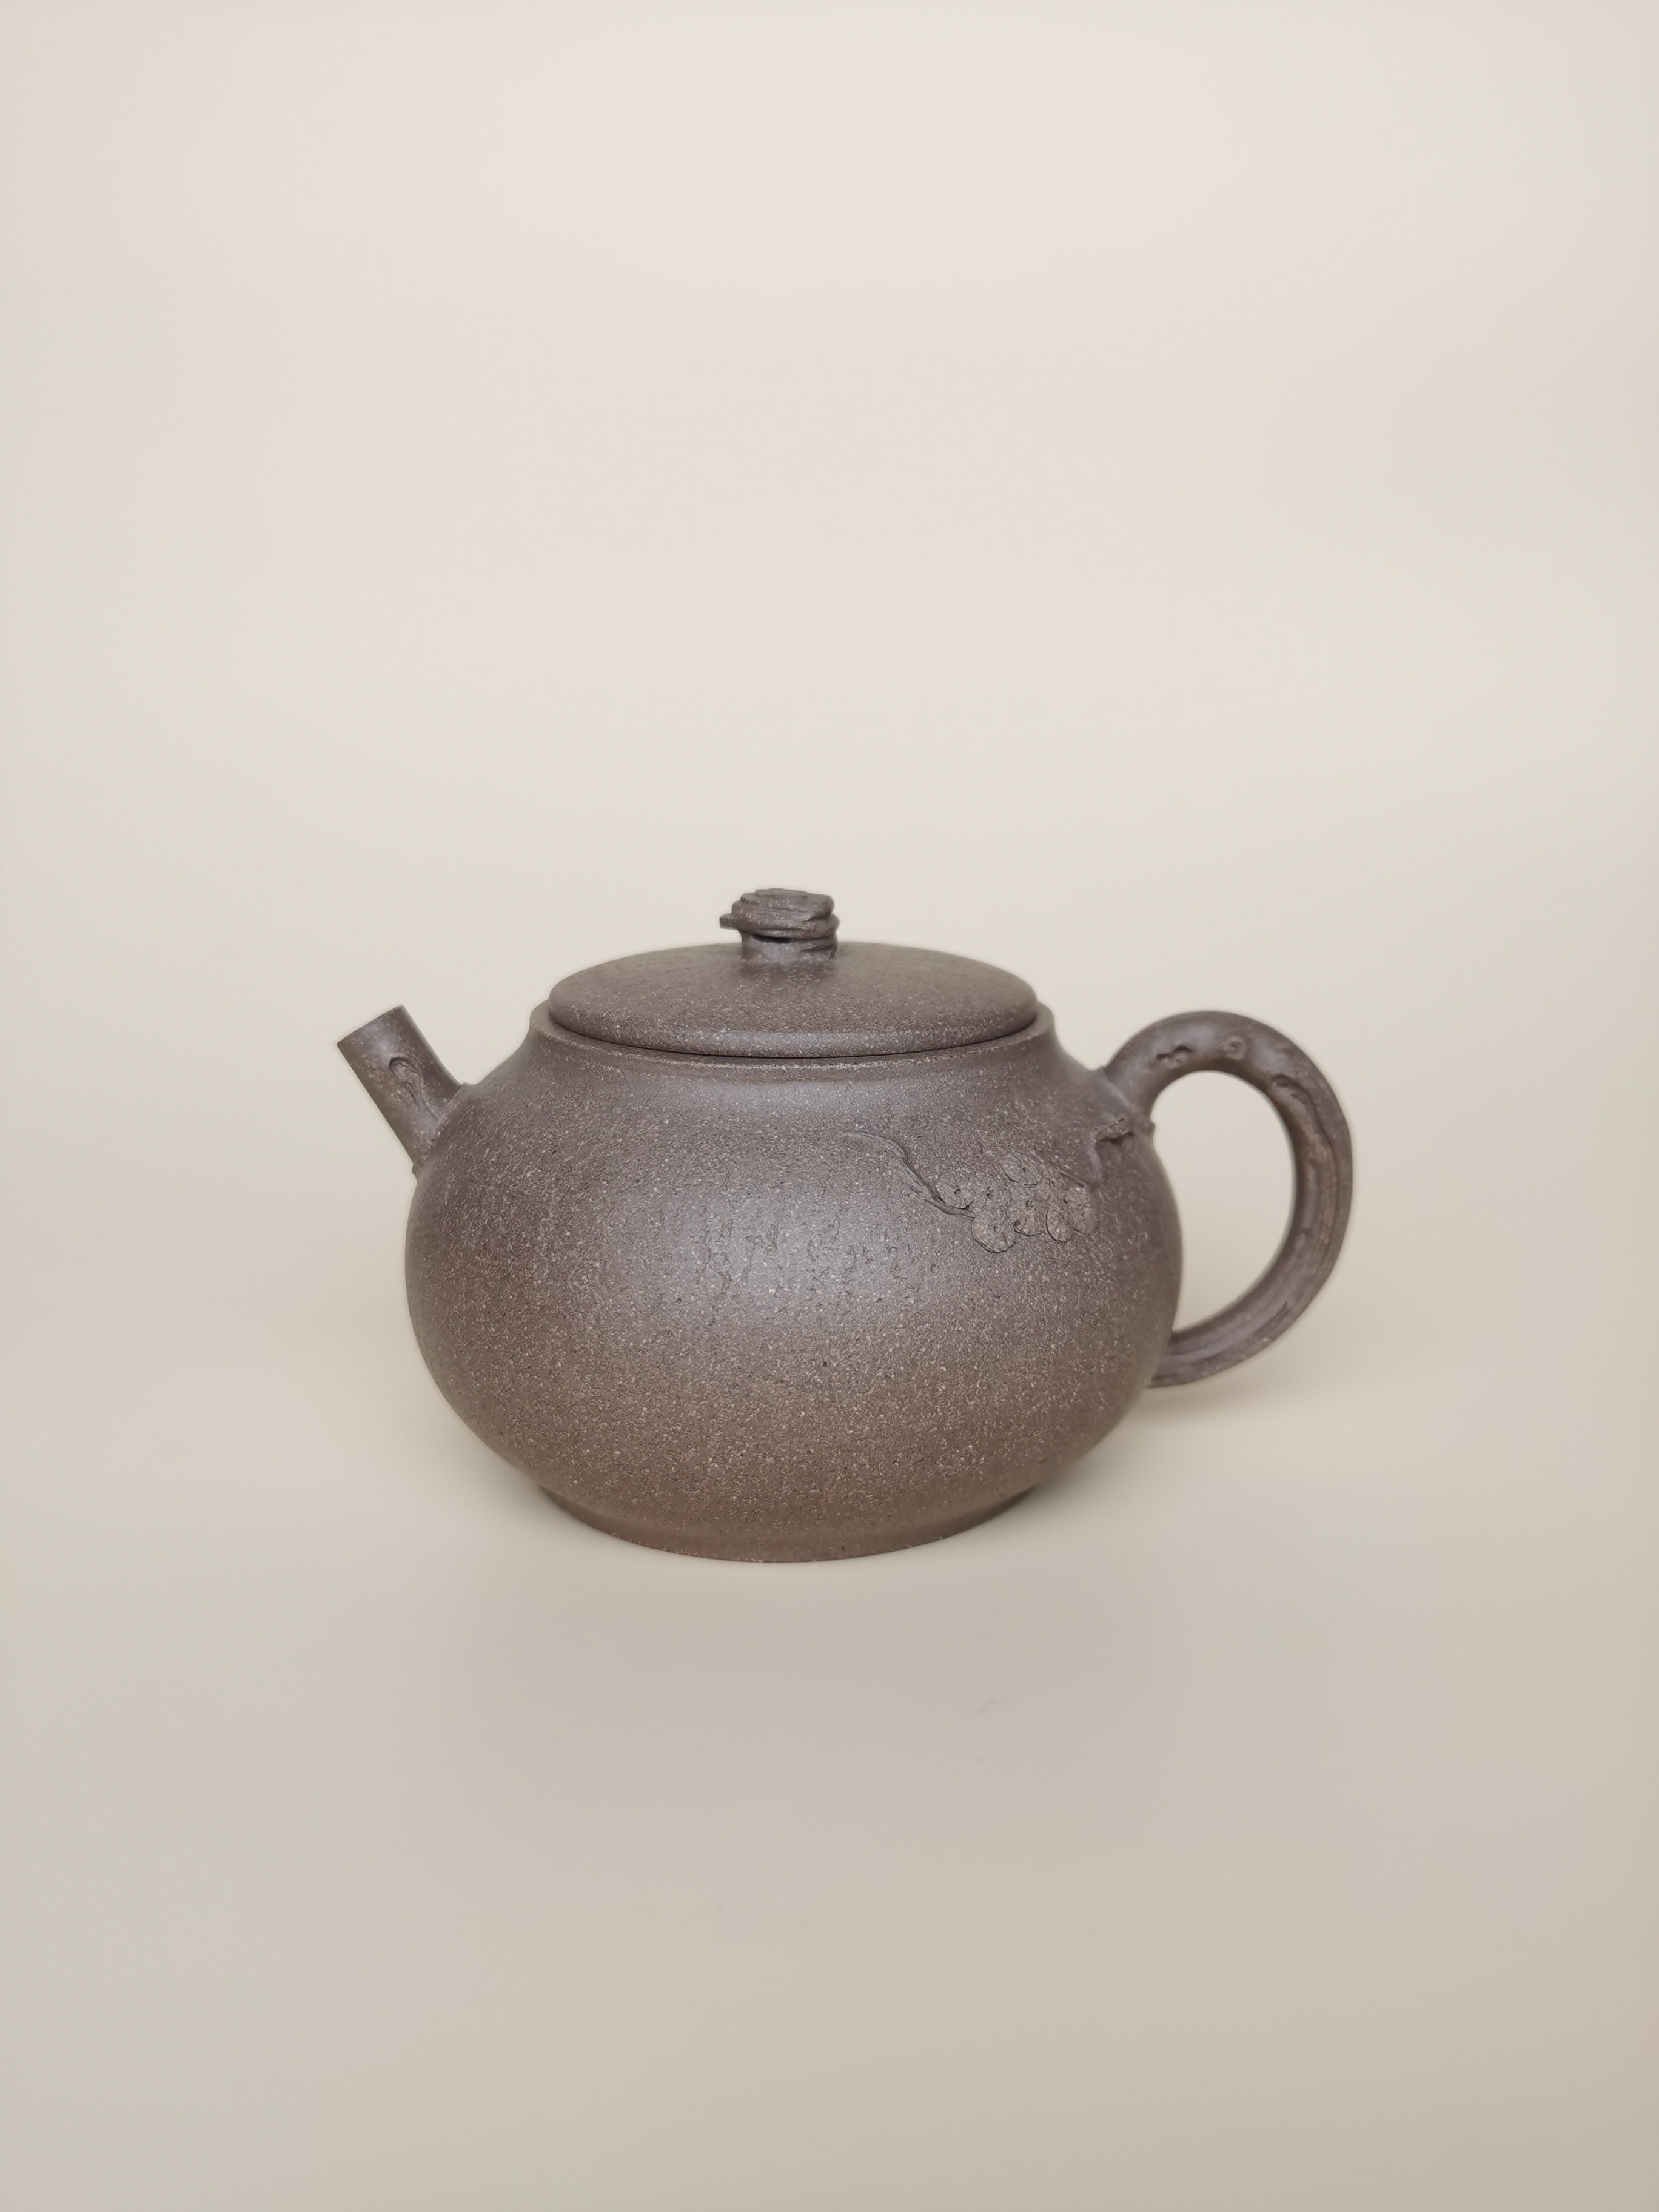 yixing teapot gongfutea teaware art collection